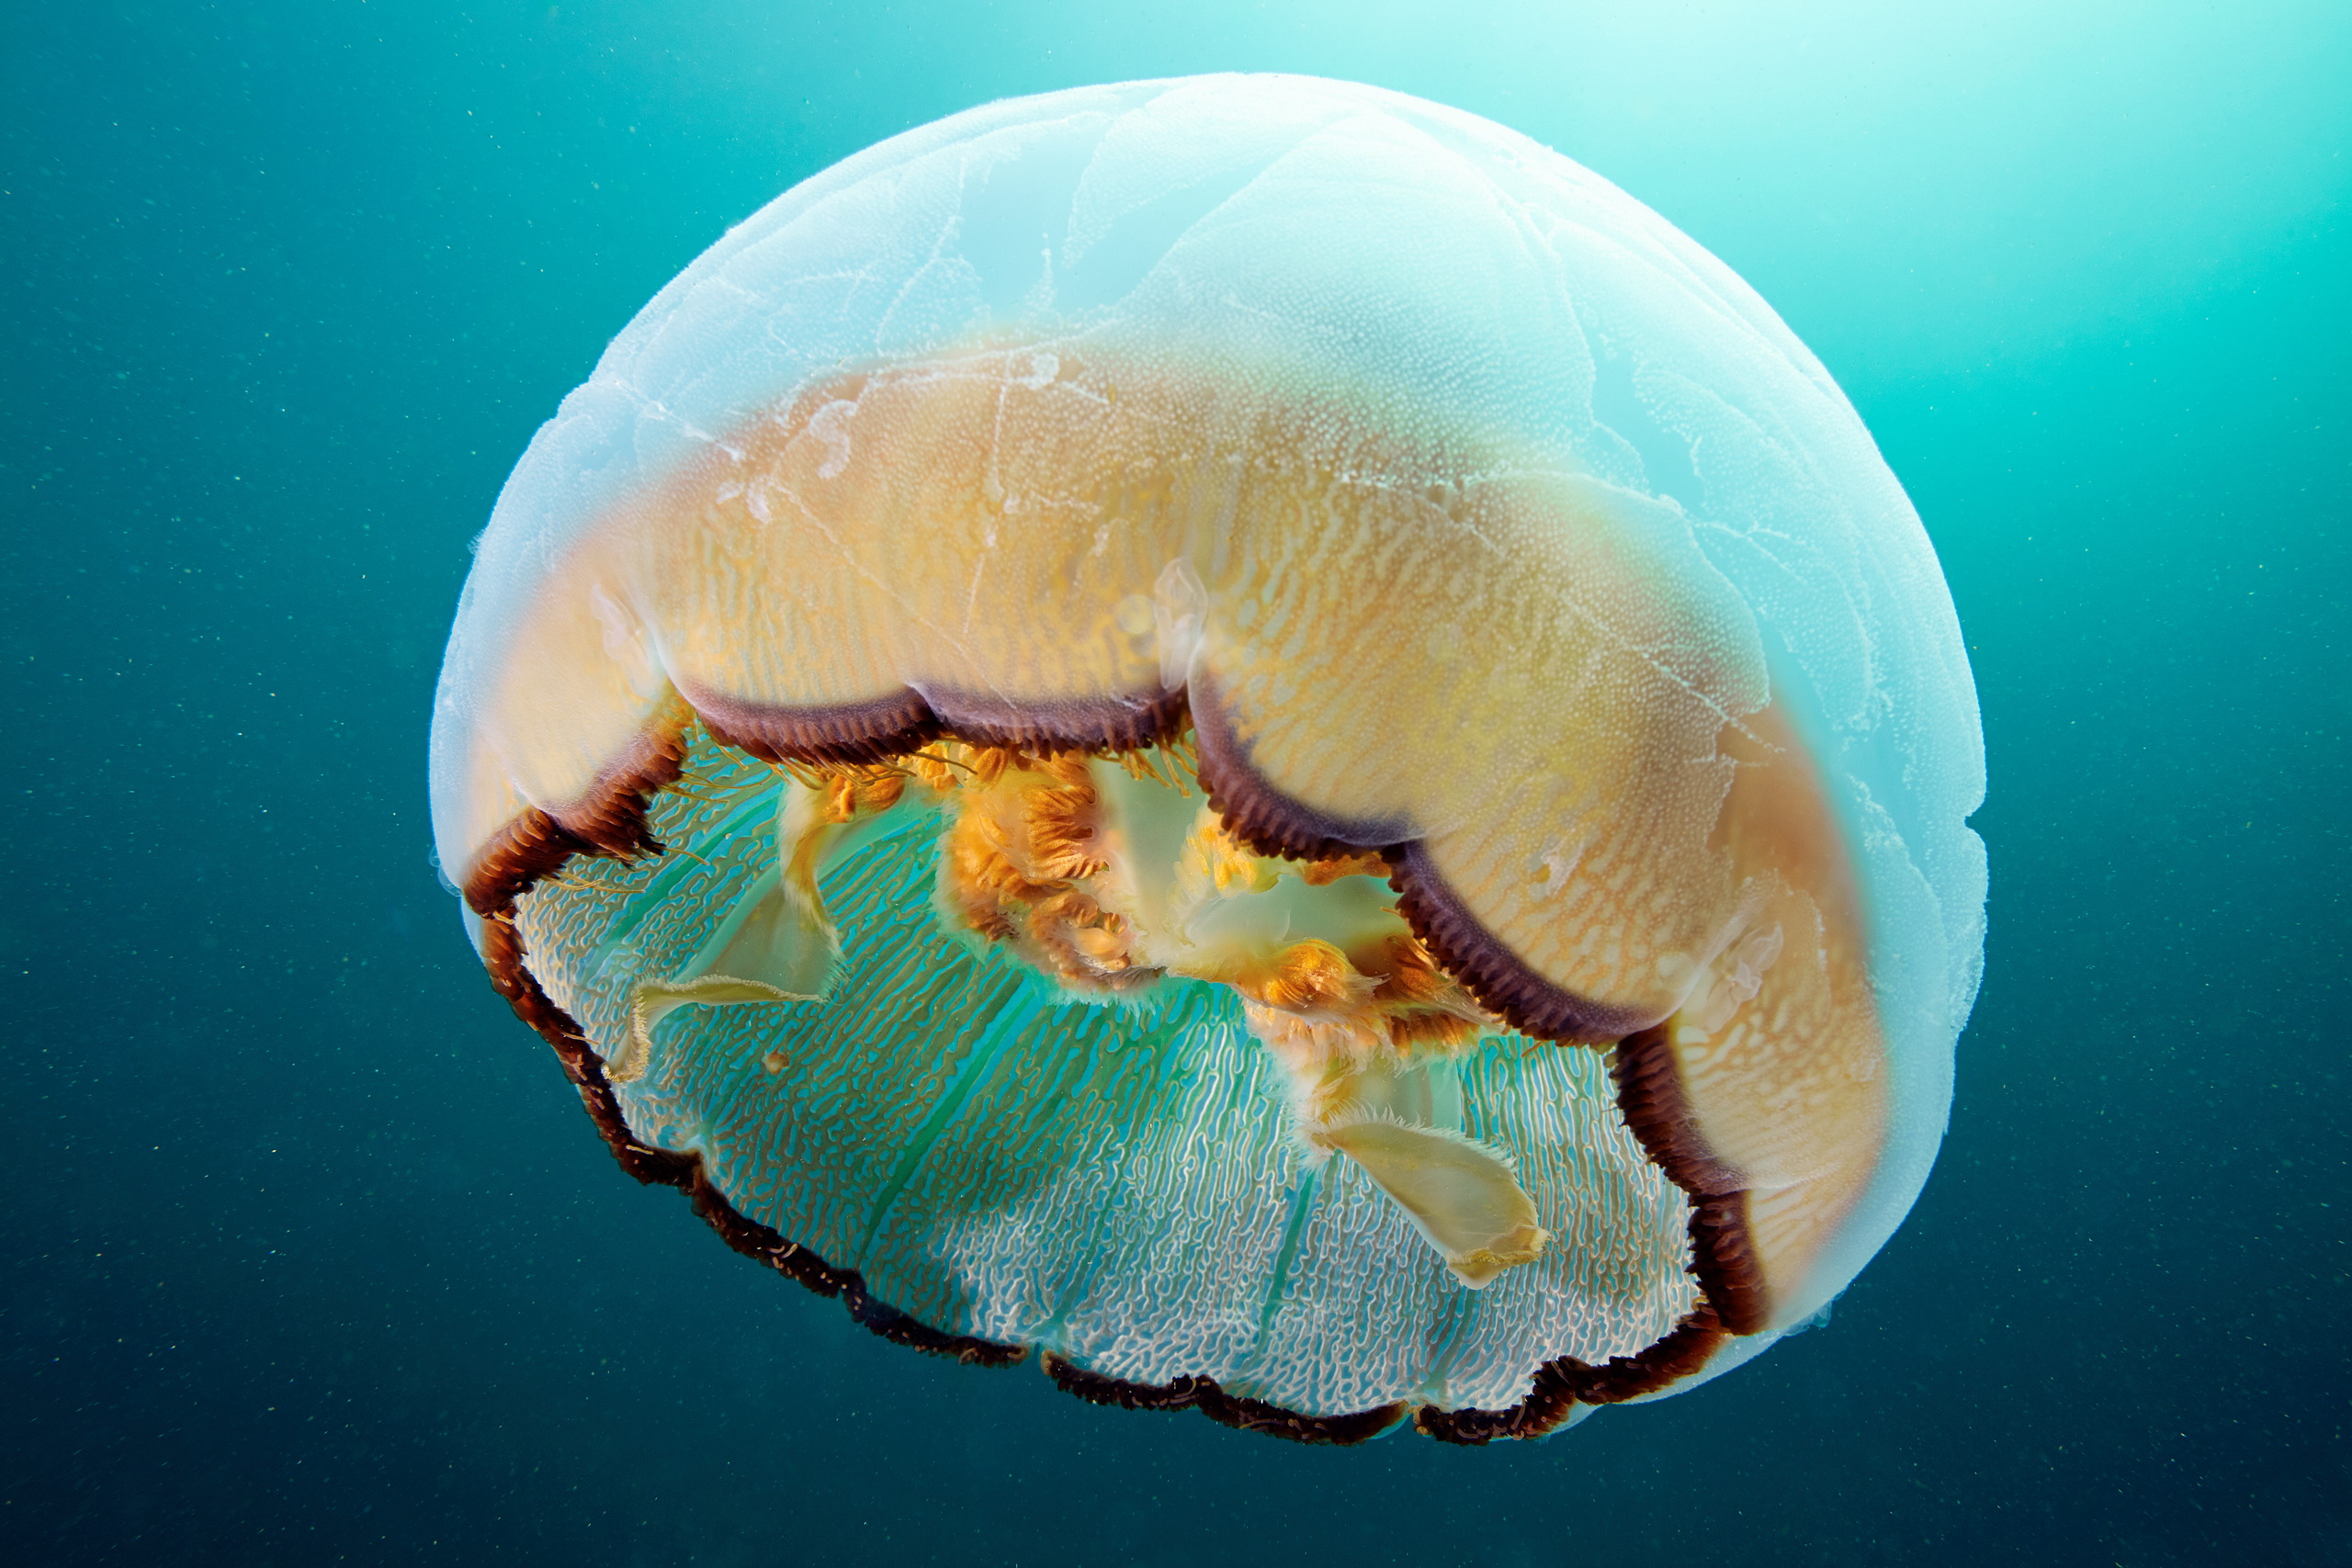 Scyphozoan jellyfish – Brown banded moon jellyfish – Aurelia limbata 2